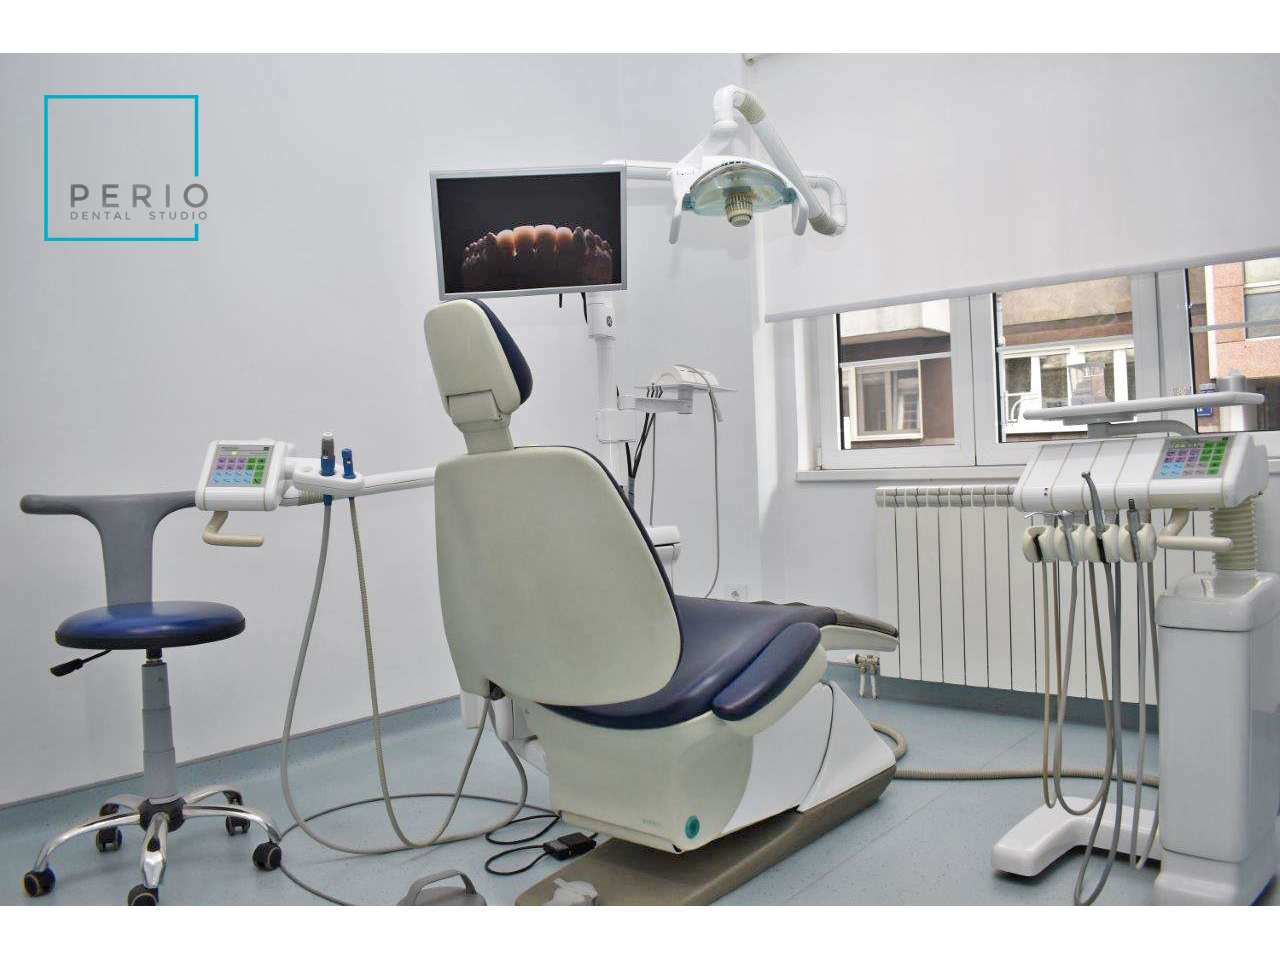 PERIO DENTAL STUDIO Dental surgery Beograd